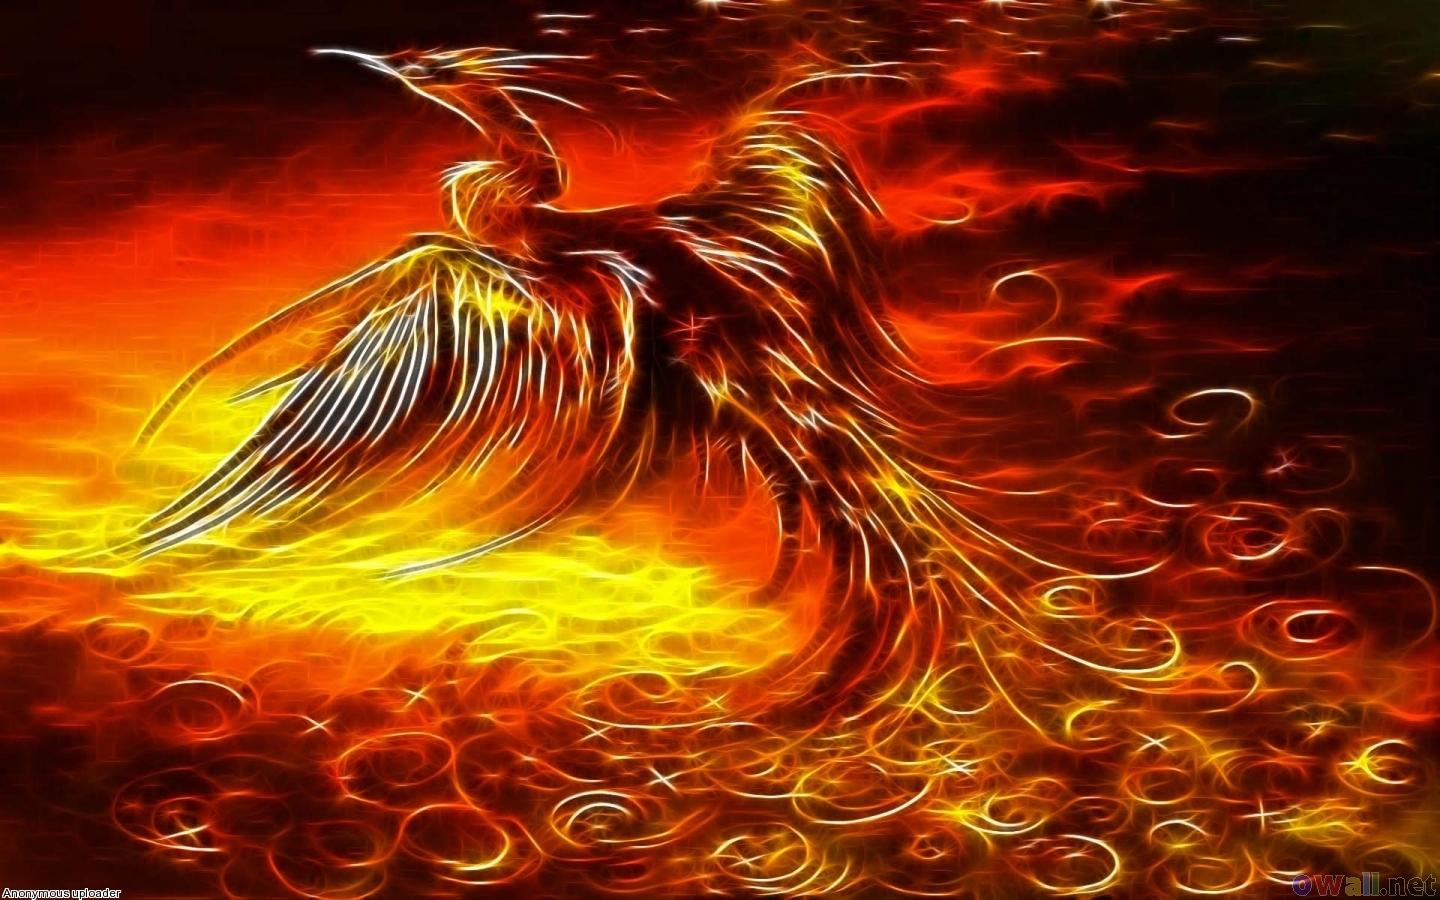 Mythical Phoenix Quotes. QuotesGram